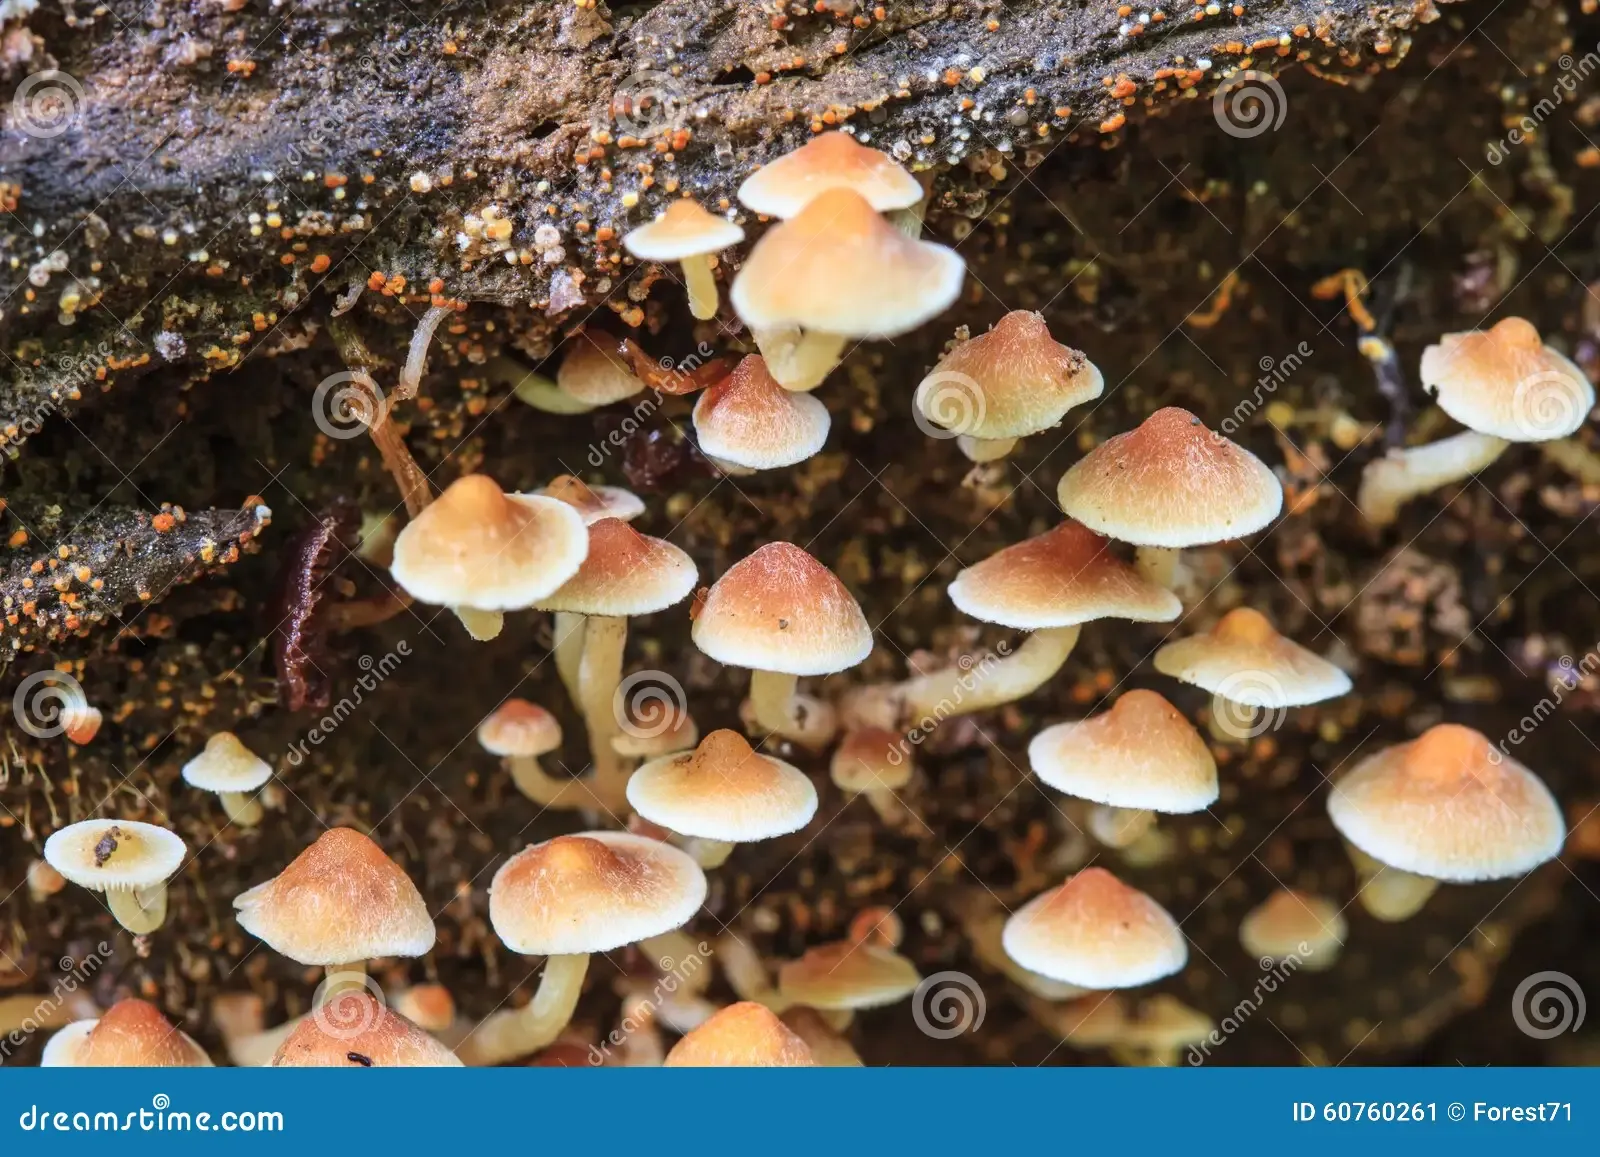 mushrooms-growing-live-tree-forest-close-up-mushroom-deep-thailand-60760261.jpg